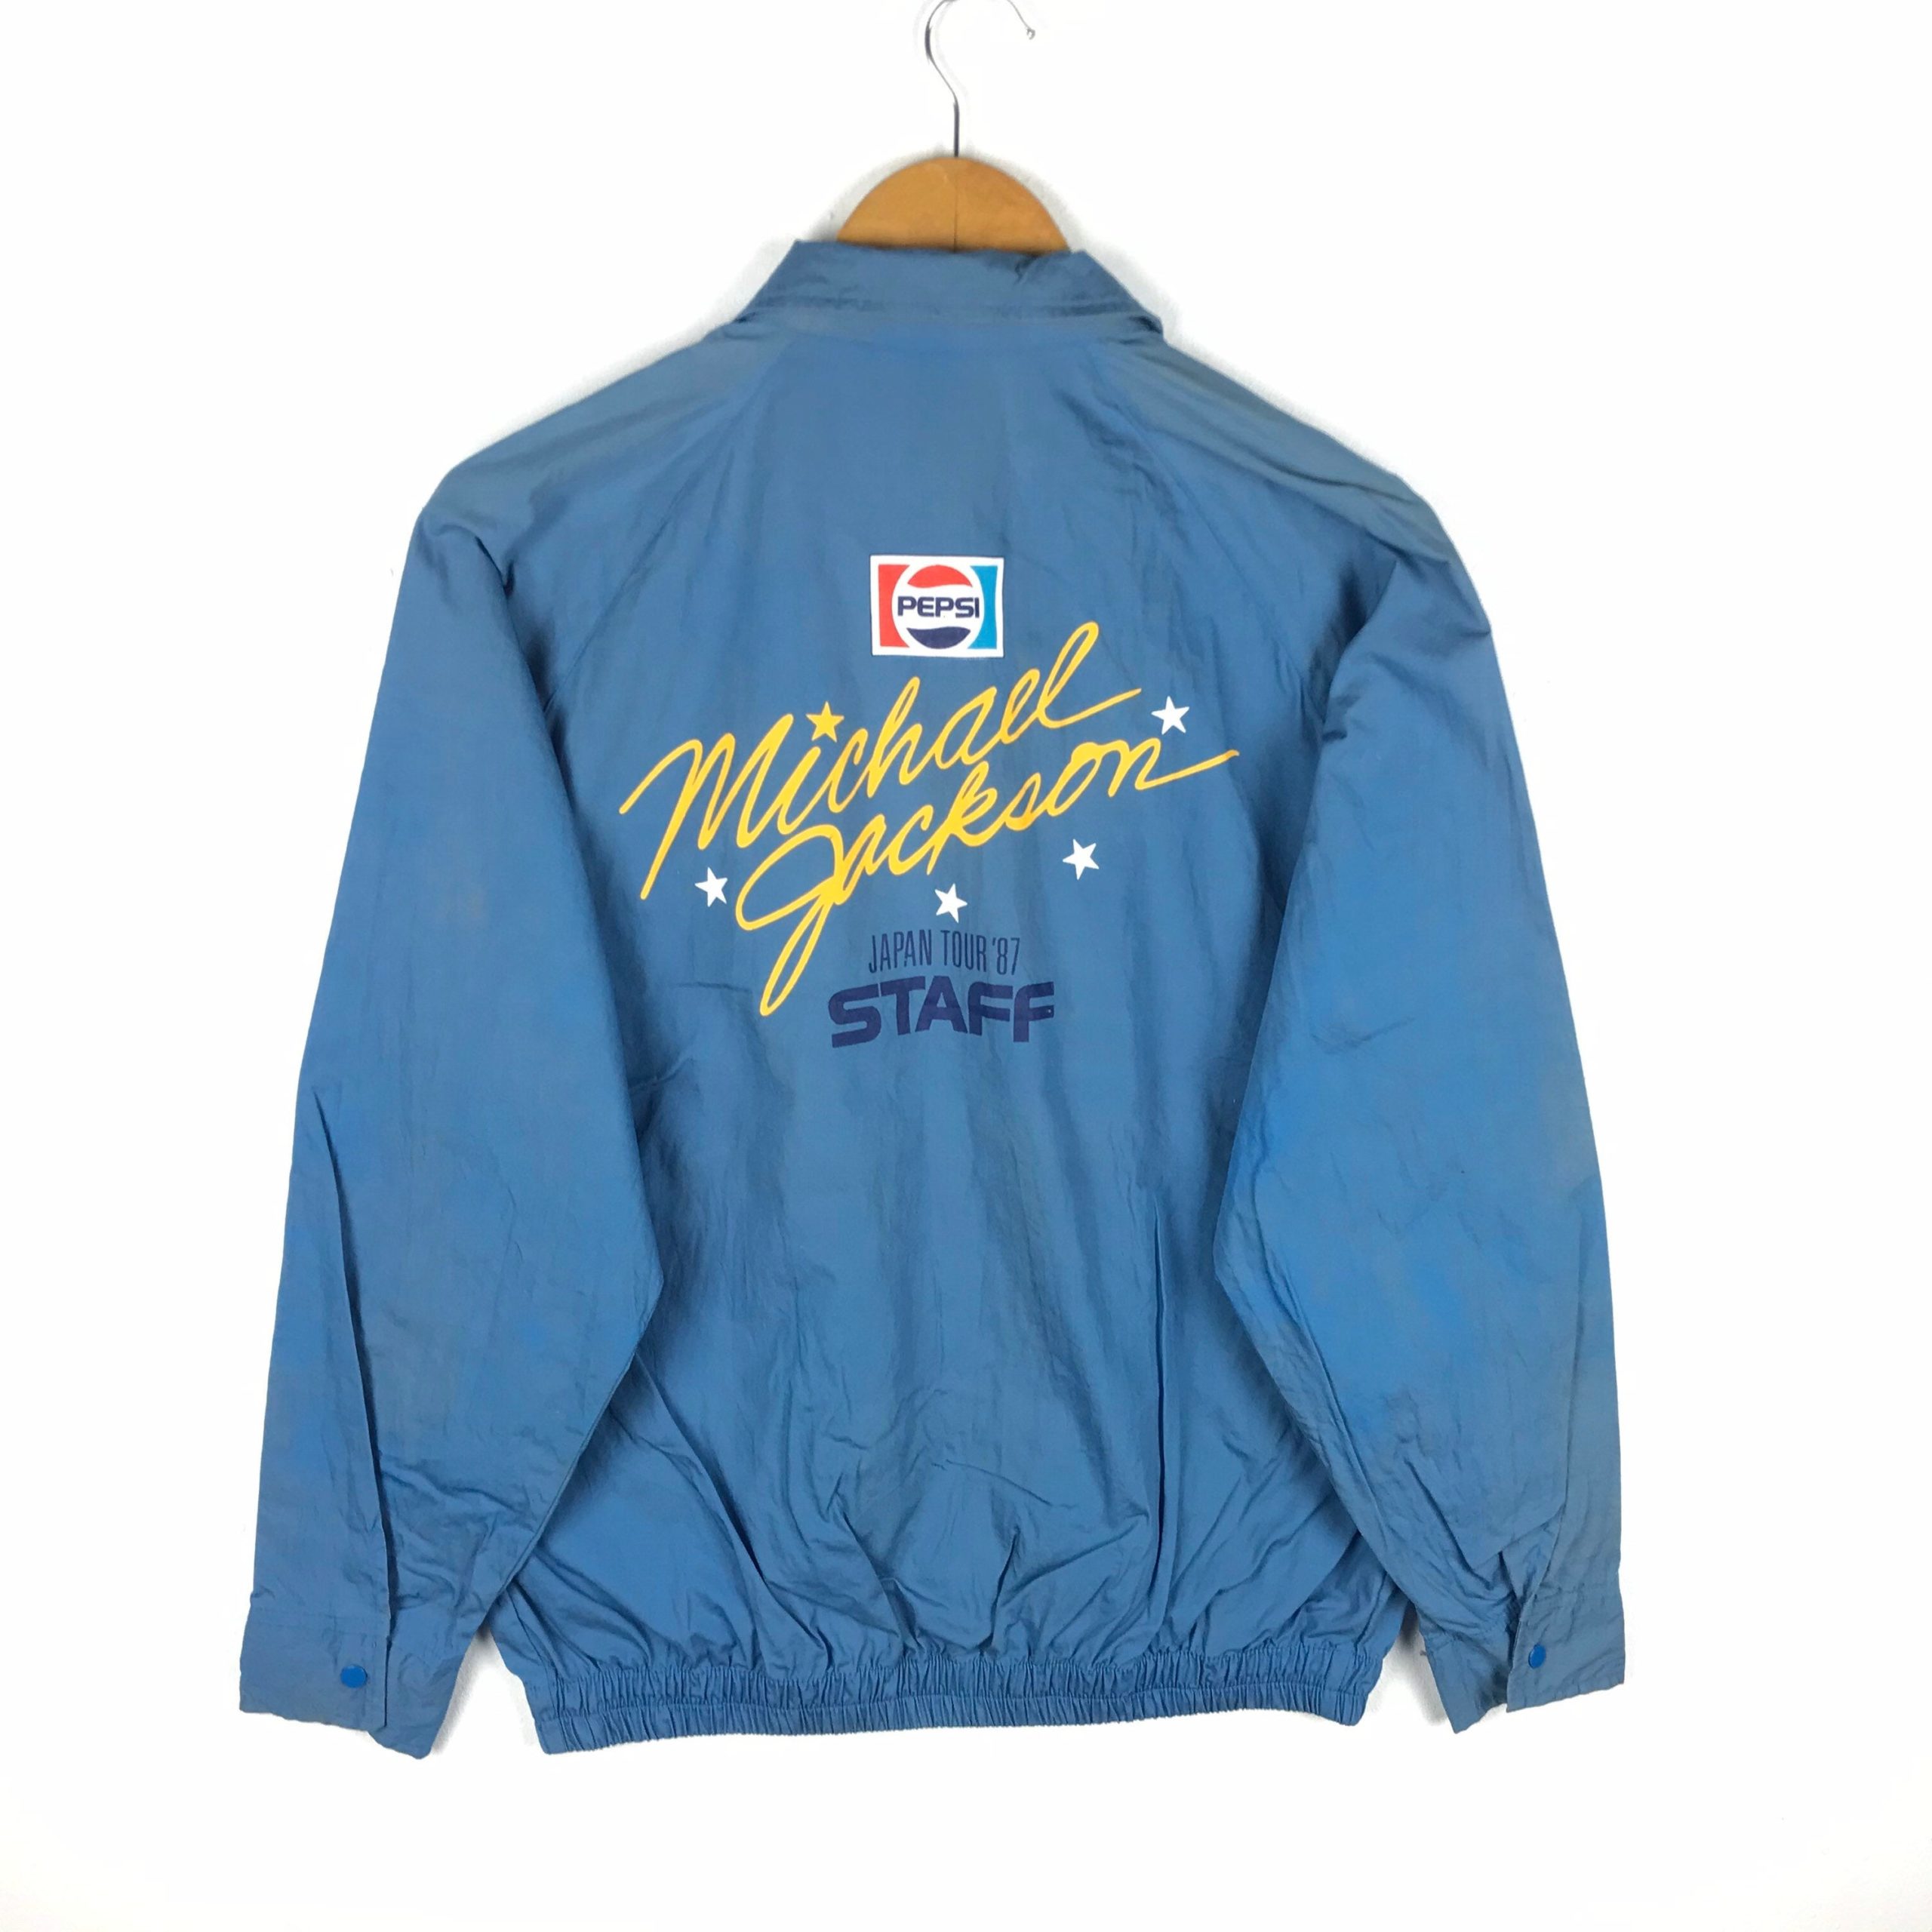 Rare !! Vintage 80s Michael Jackson Japan Tour '87 Staff Jacket - Maker of  Jacket